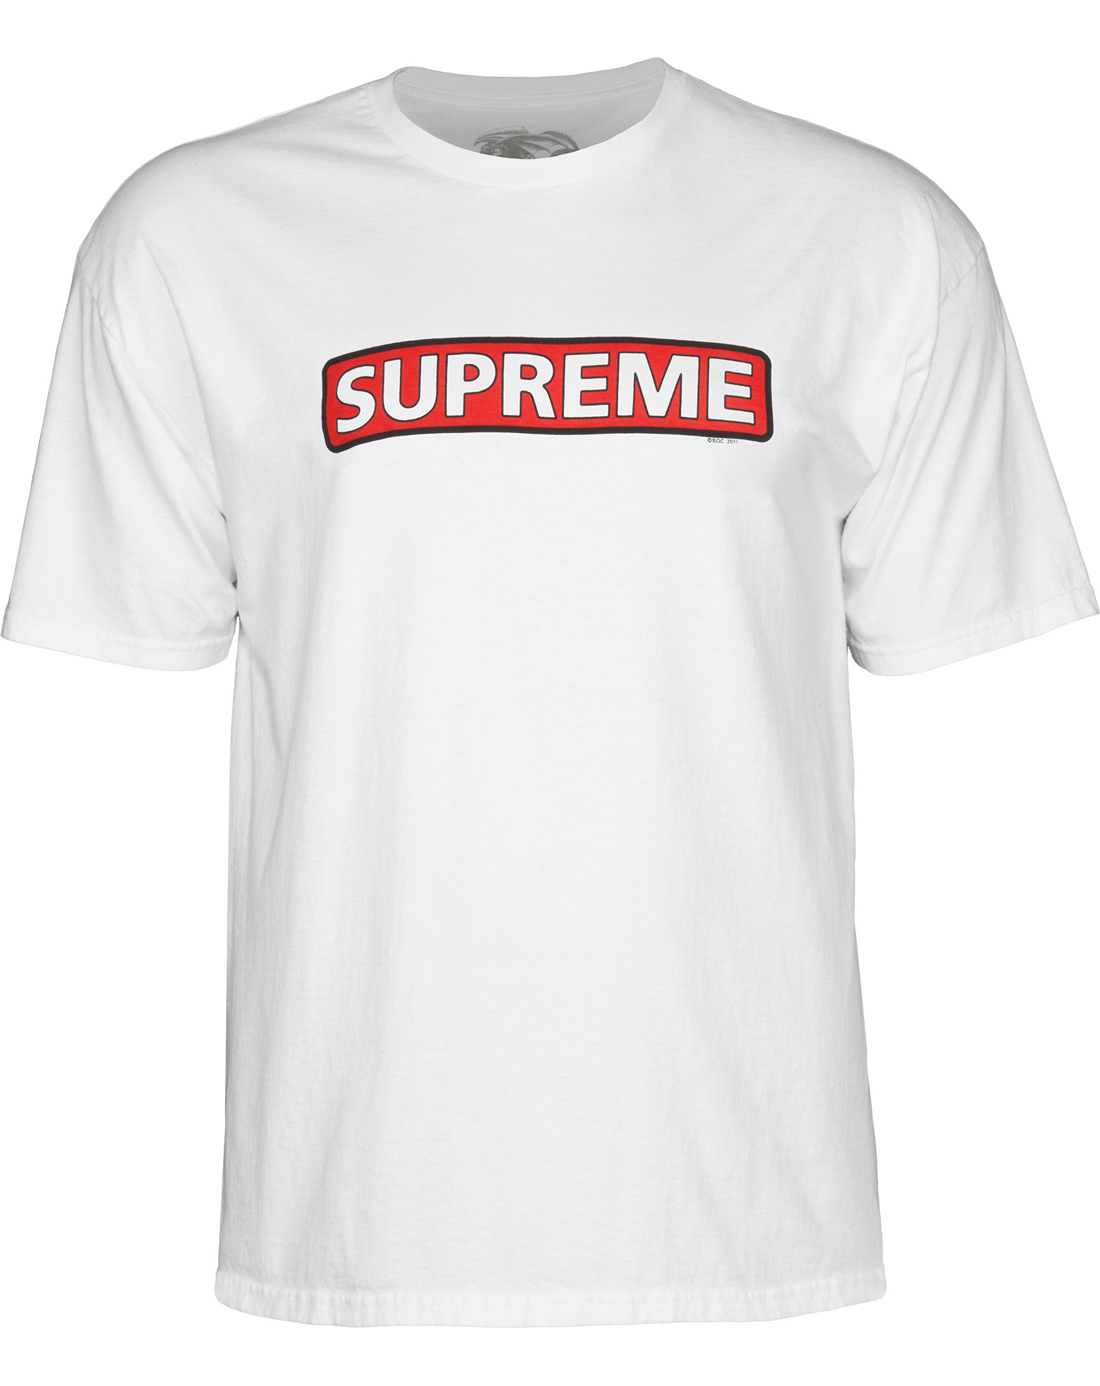 Peralta Supreme Camiseta para Hombre White